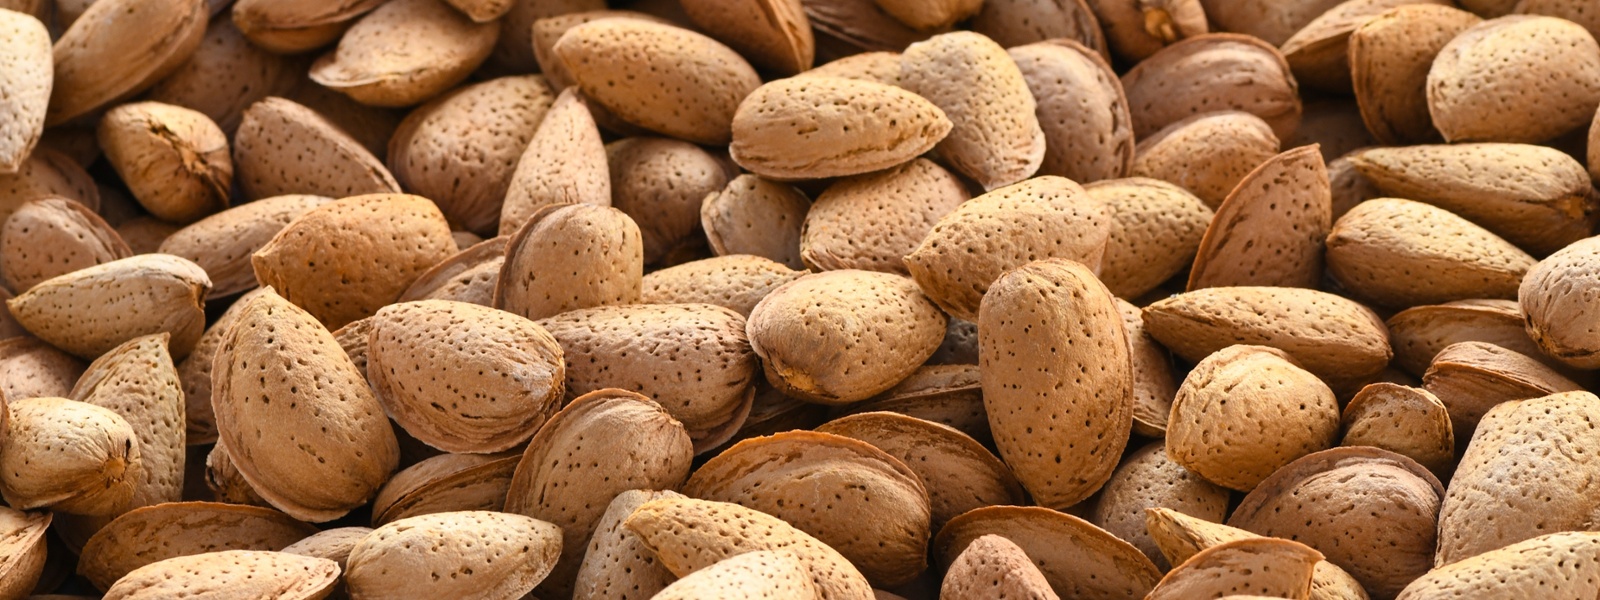 India to remove retaliatory tariffs on almonds, walnuts